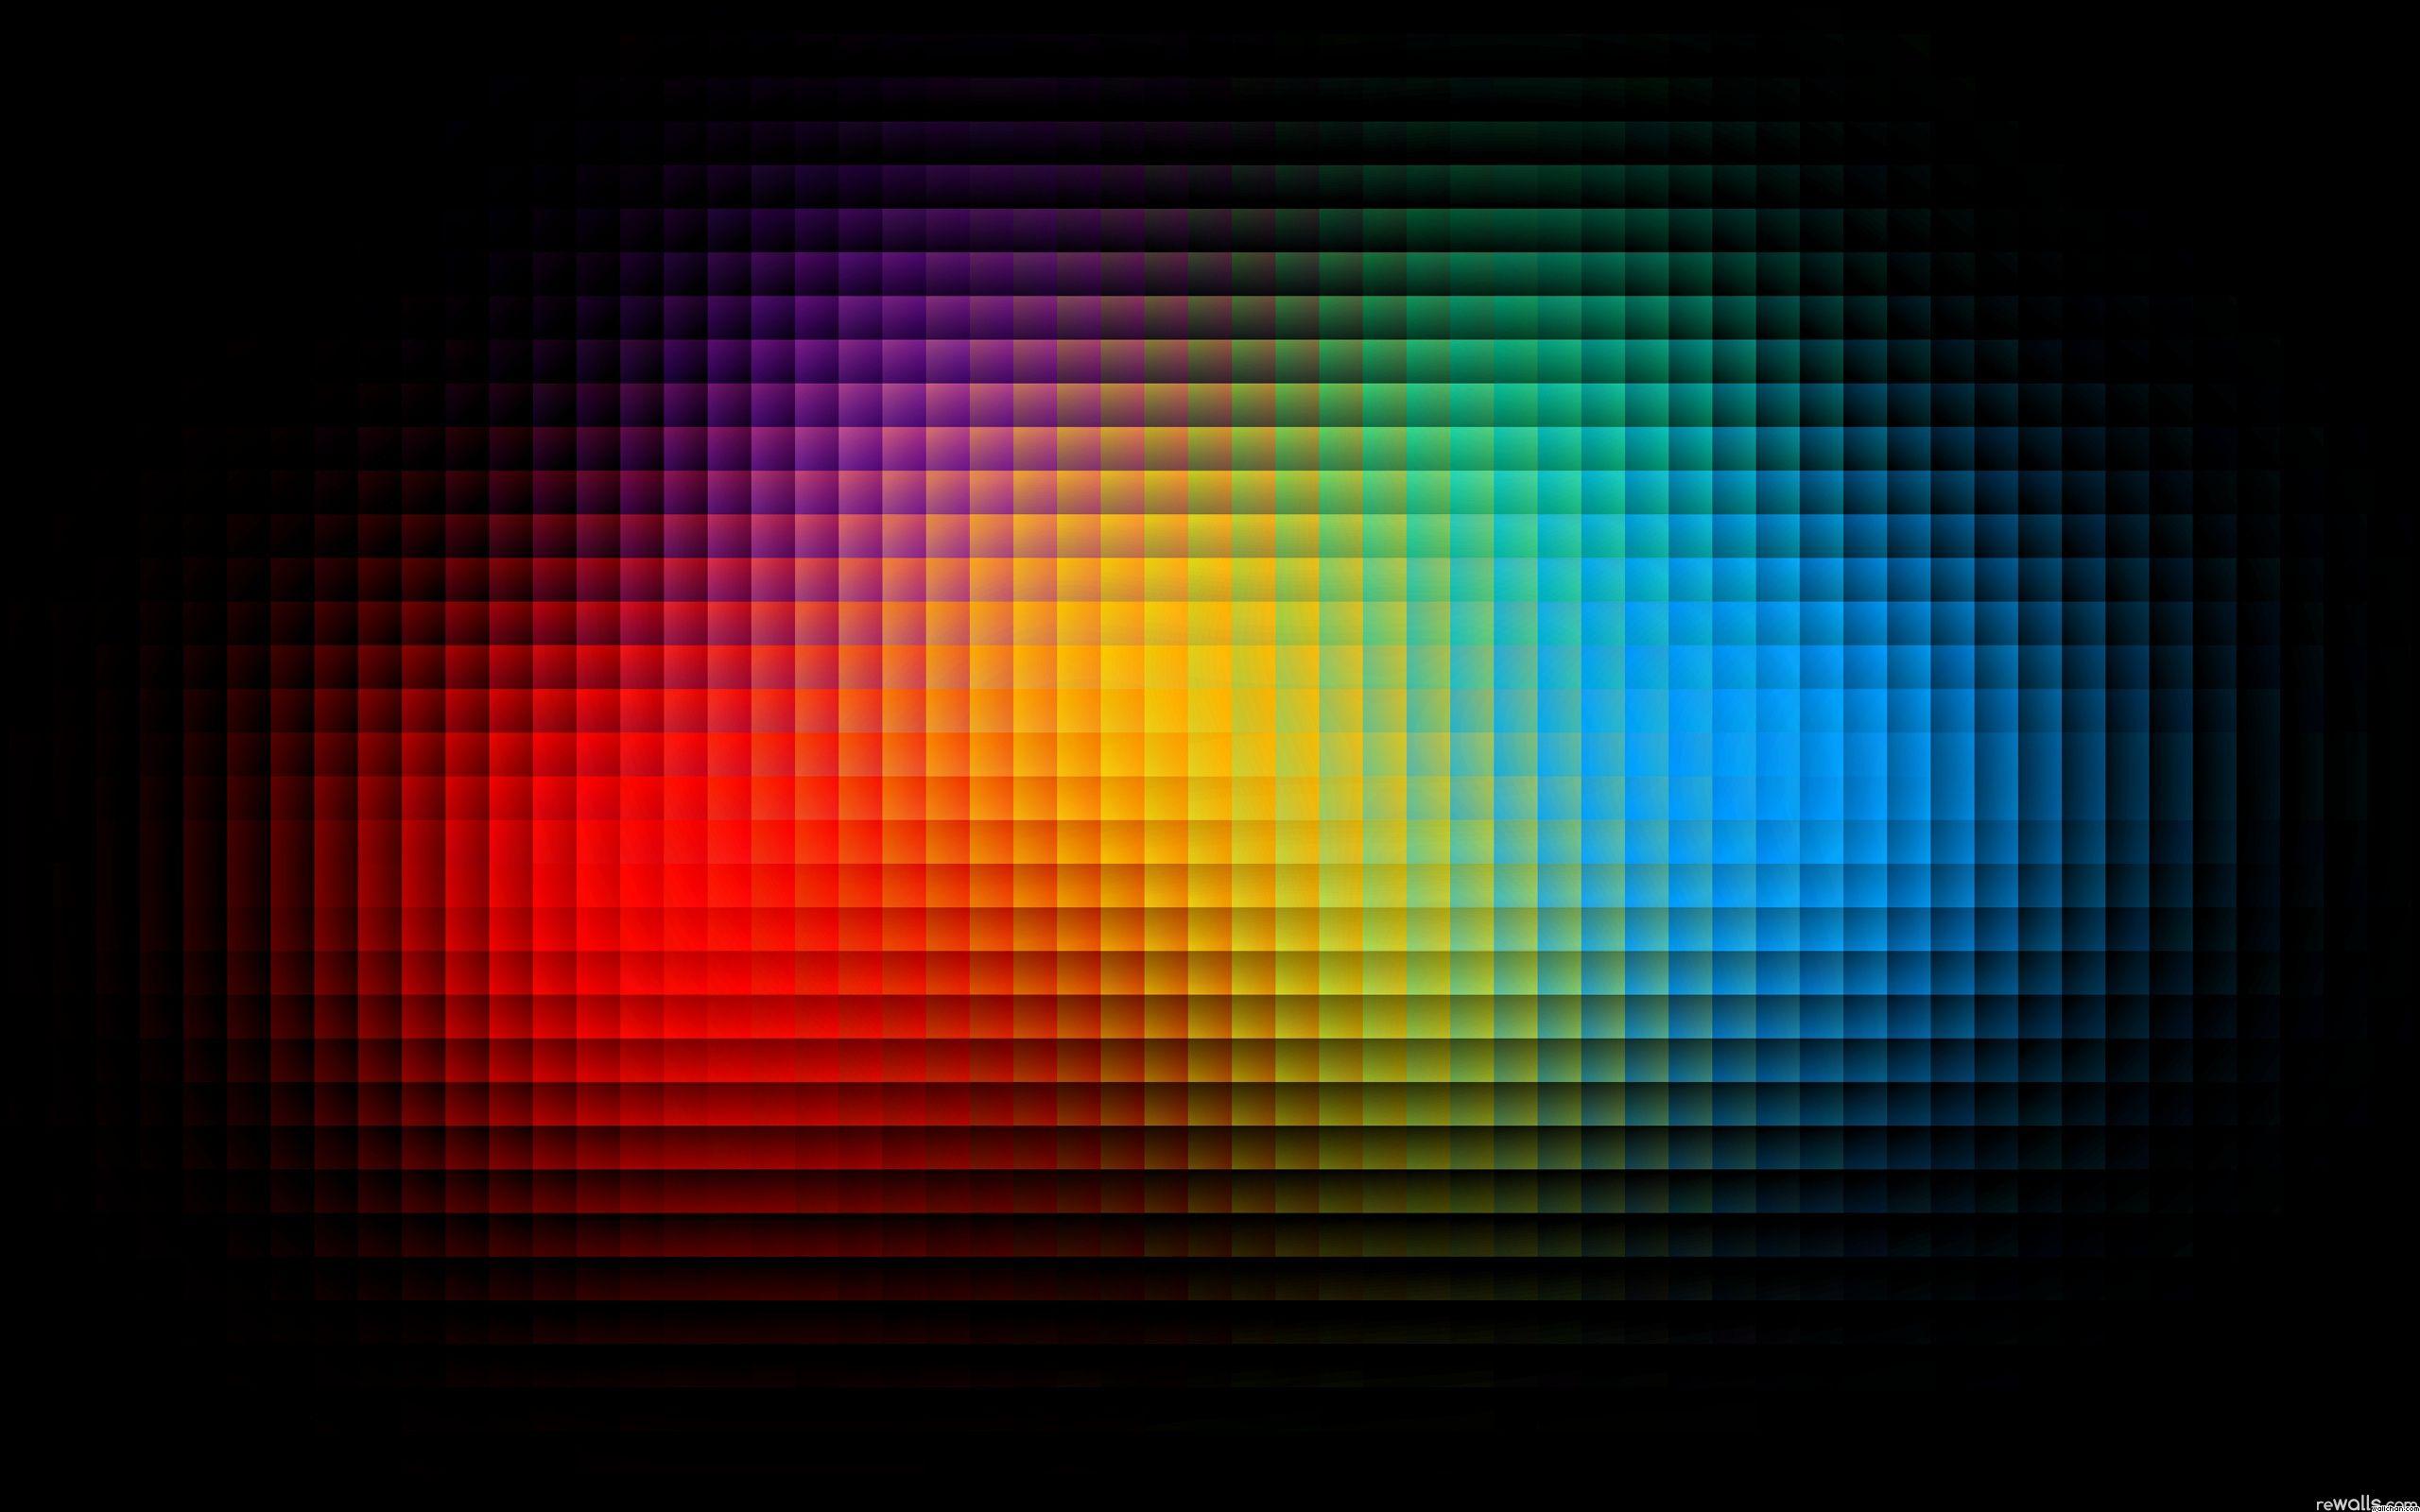 Download wallpaper: rainbow on black background, download photo, Rainbow